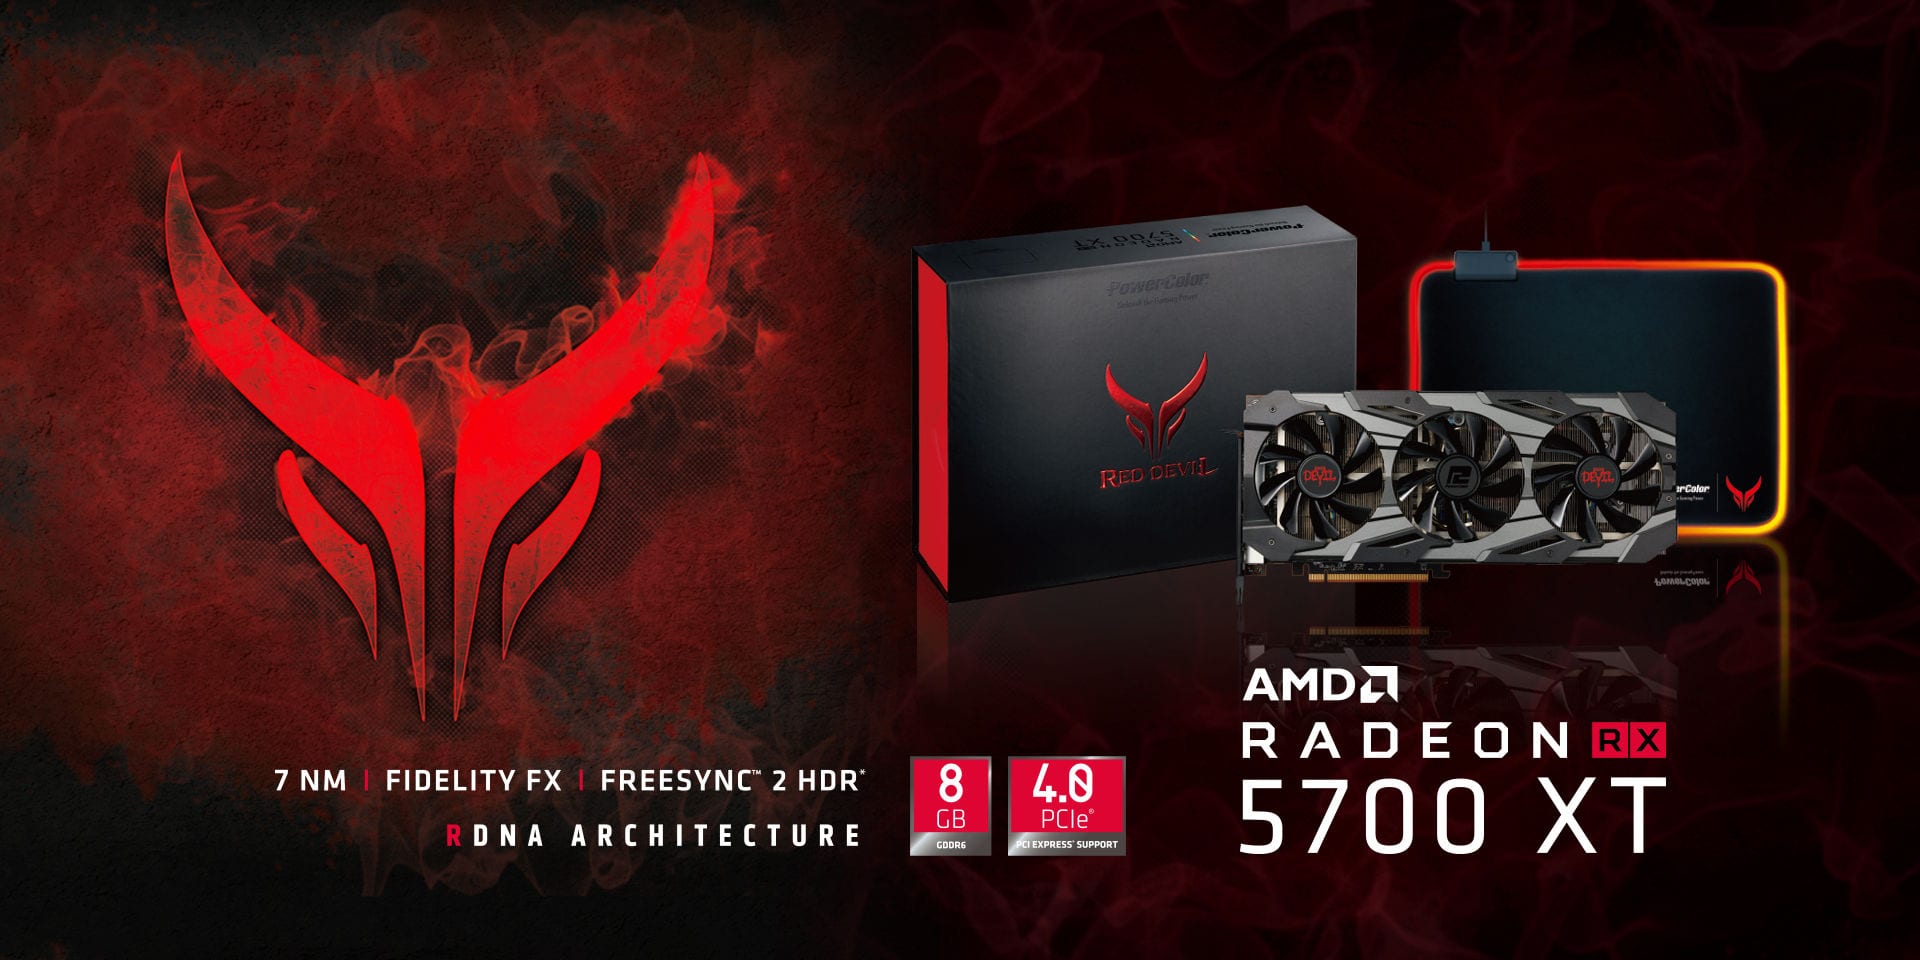 AMD Radeon RX 5700 XT Third-Party Models Among Top 5 ...